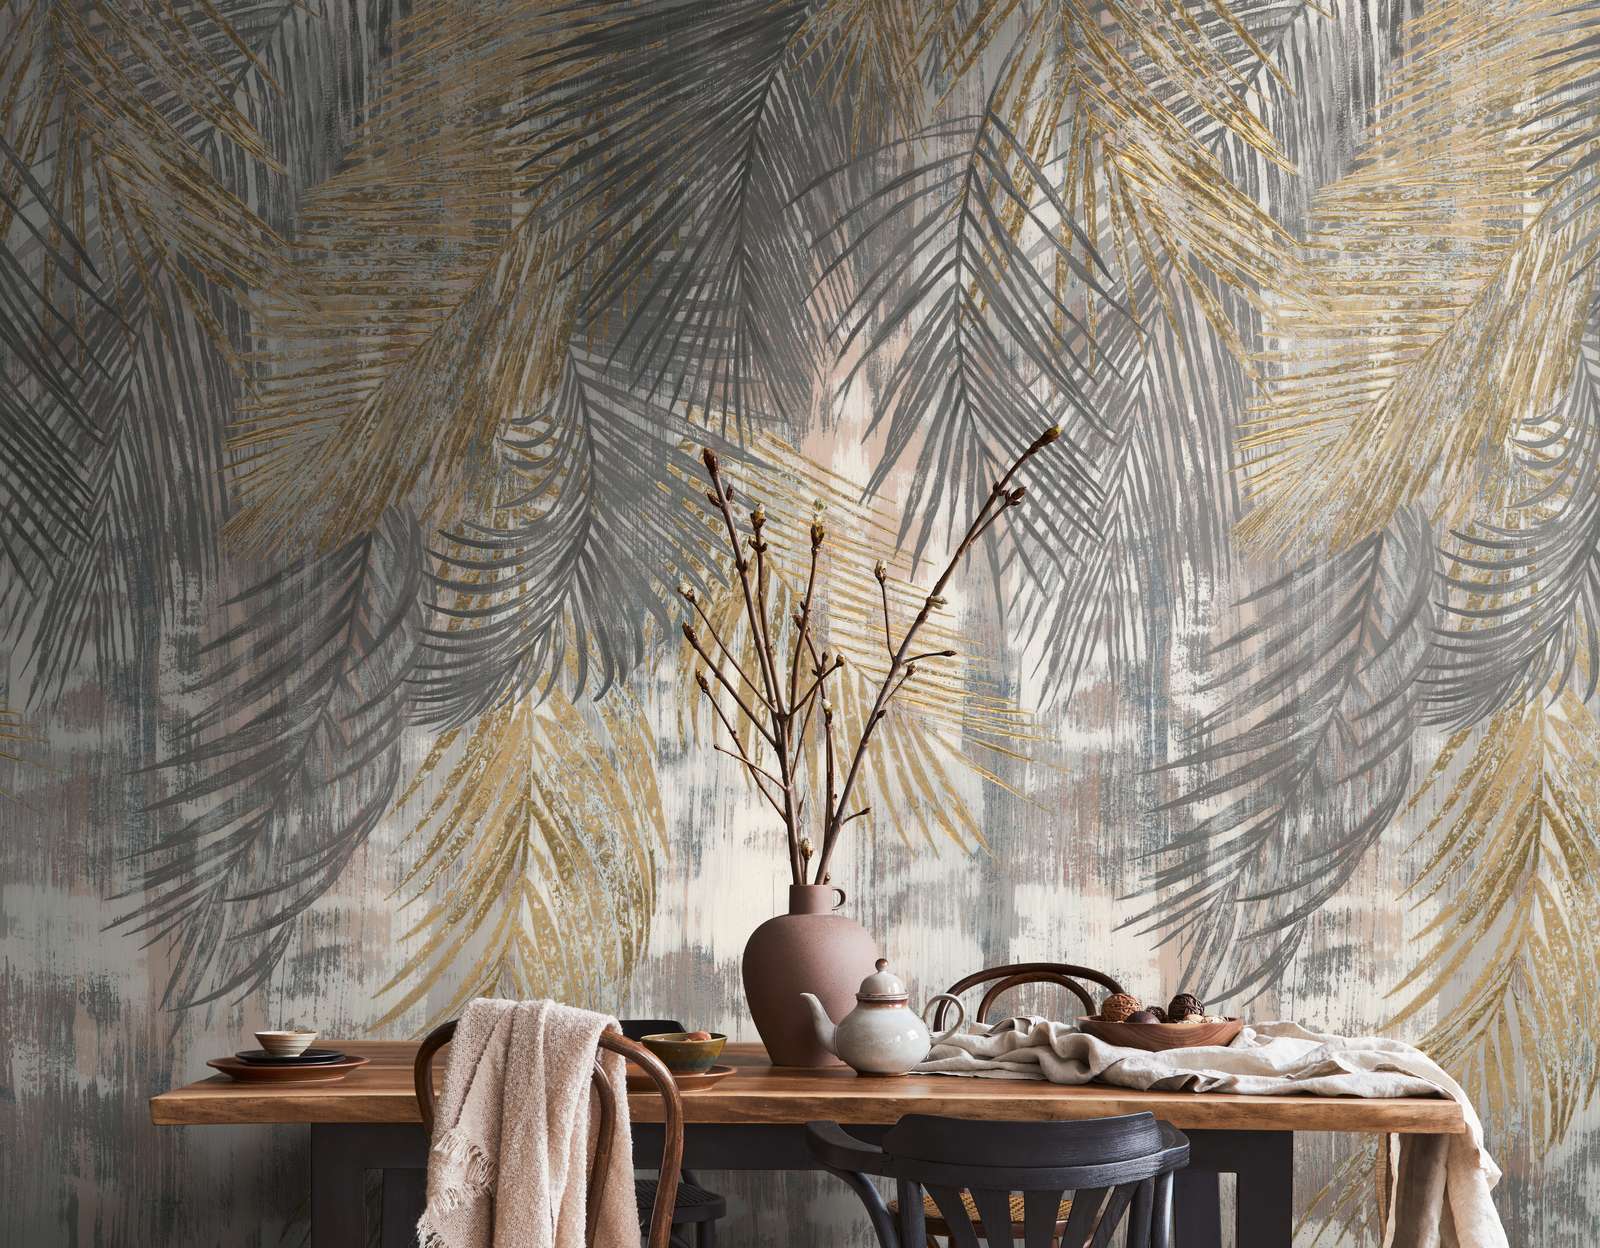             Vliesbehang grote palmbladeren in used look - grijs, geel, beige
        